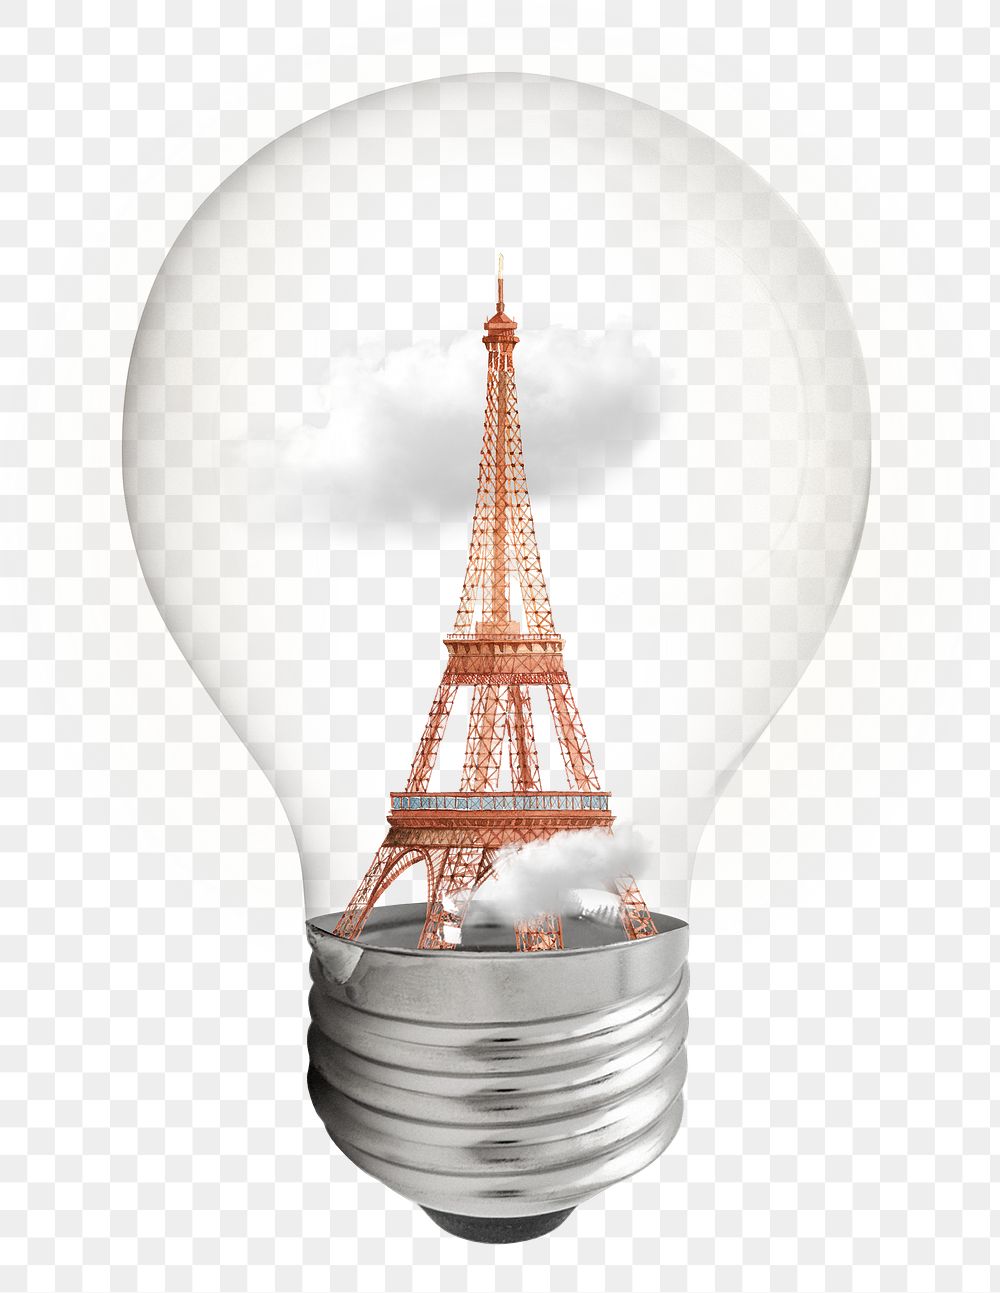 Eiffel Tower png sticker, Paris land mark light bulb remixed media, transparent background